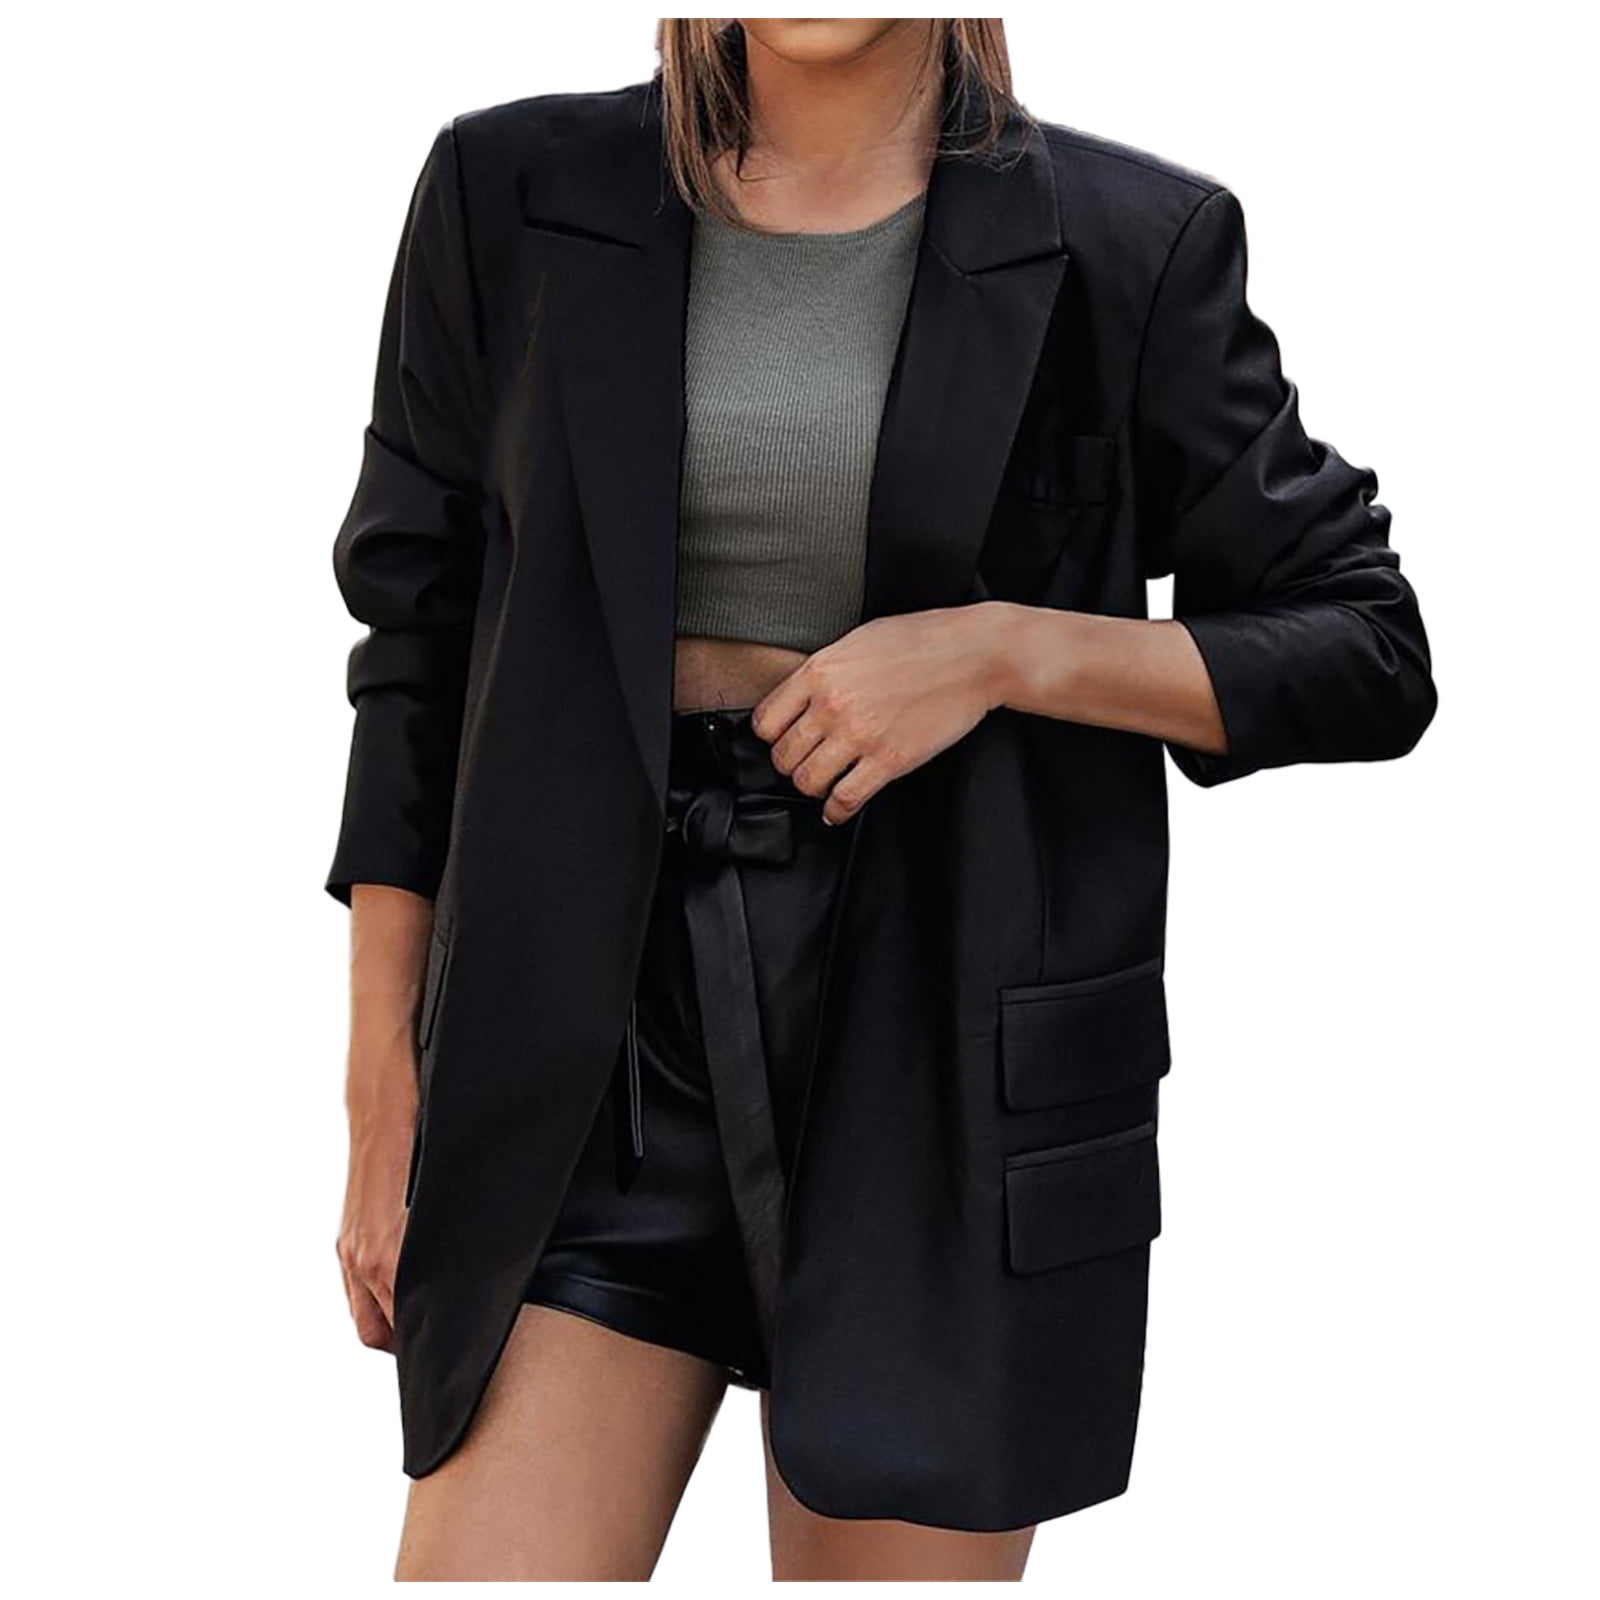 Olyvenn Women Casua Business Attire Printing Long Sleeve Cardigan Top  Jacket Coat Outwear Work Office Jacket Suit Business Hoodless Scuba Blazer  Black 4 